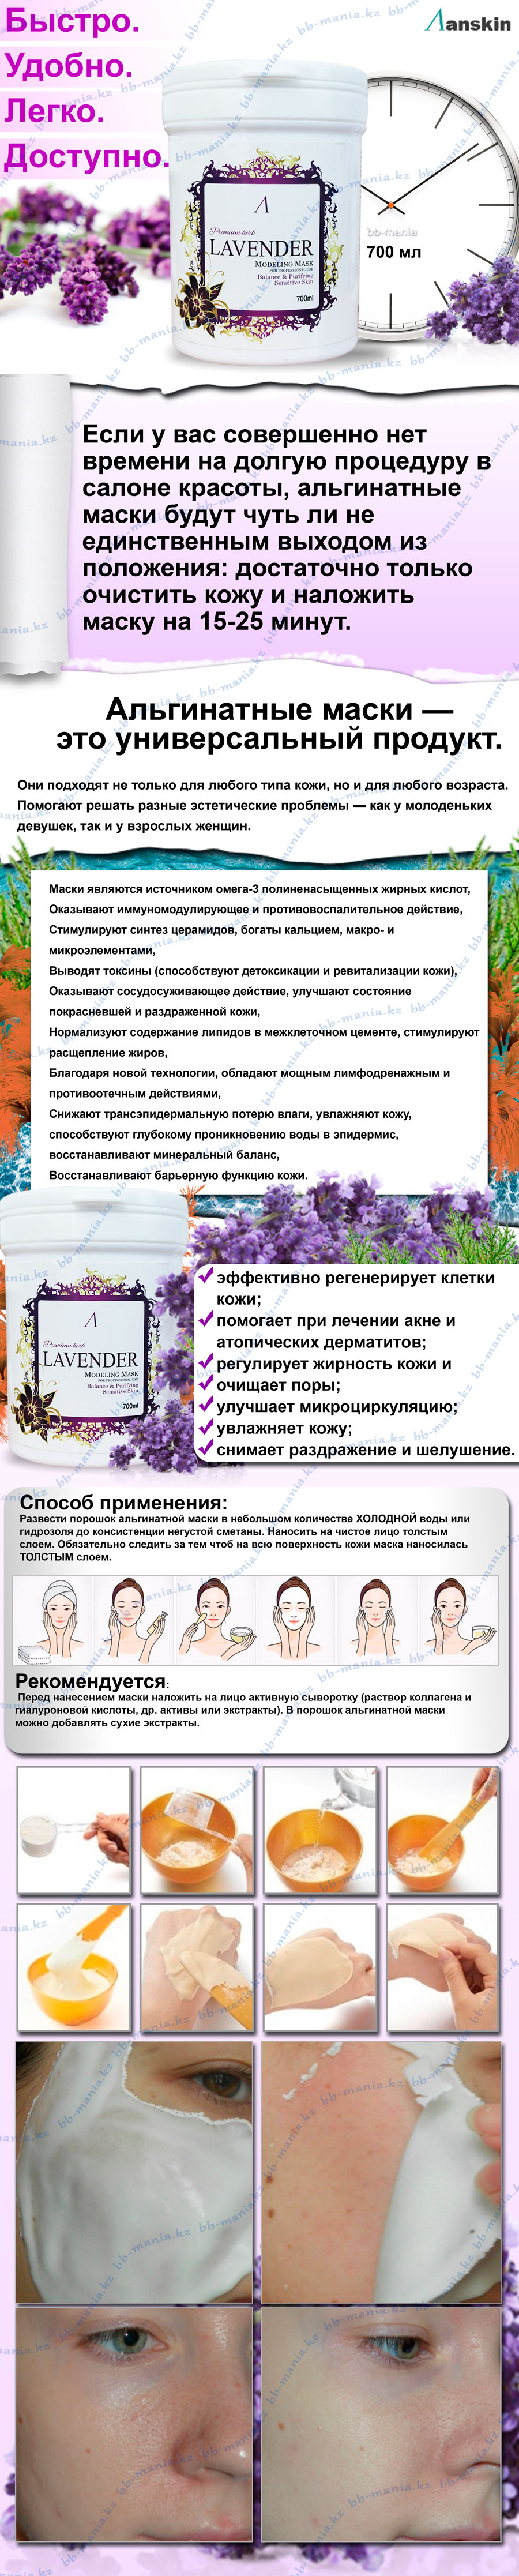 Lavender-min